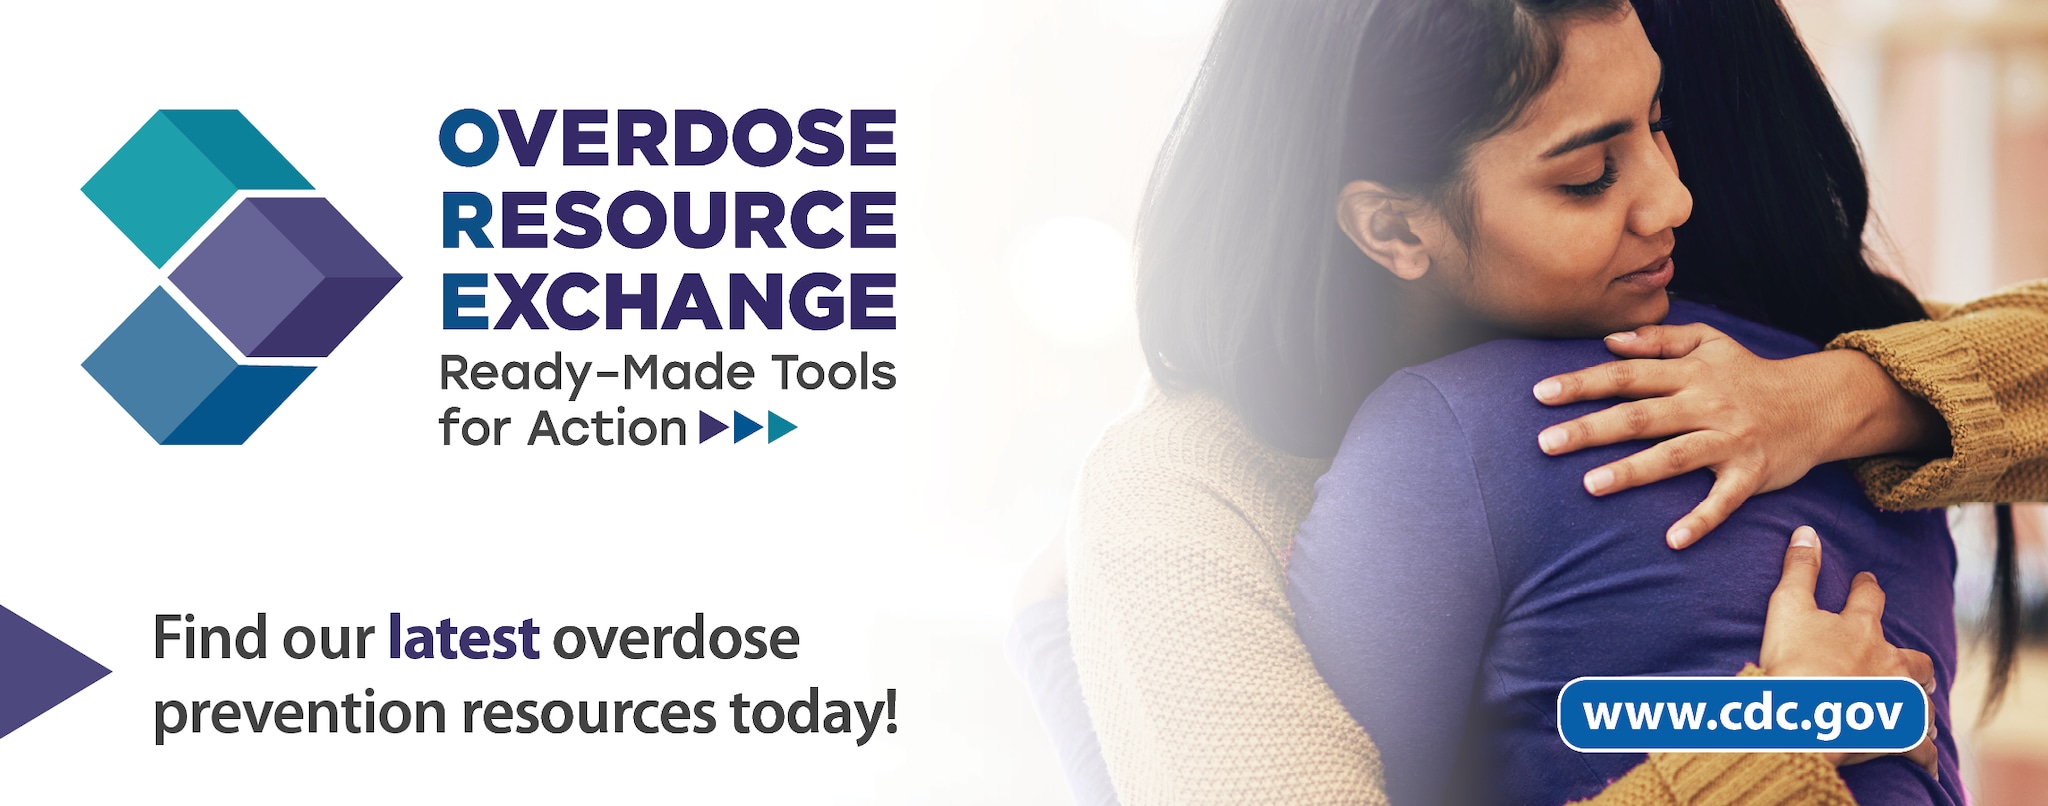 Overdose Resource Exchange